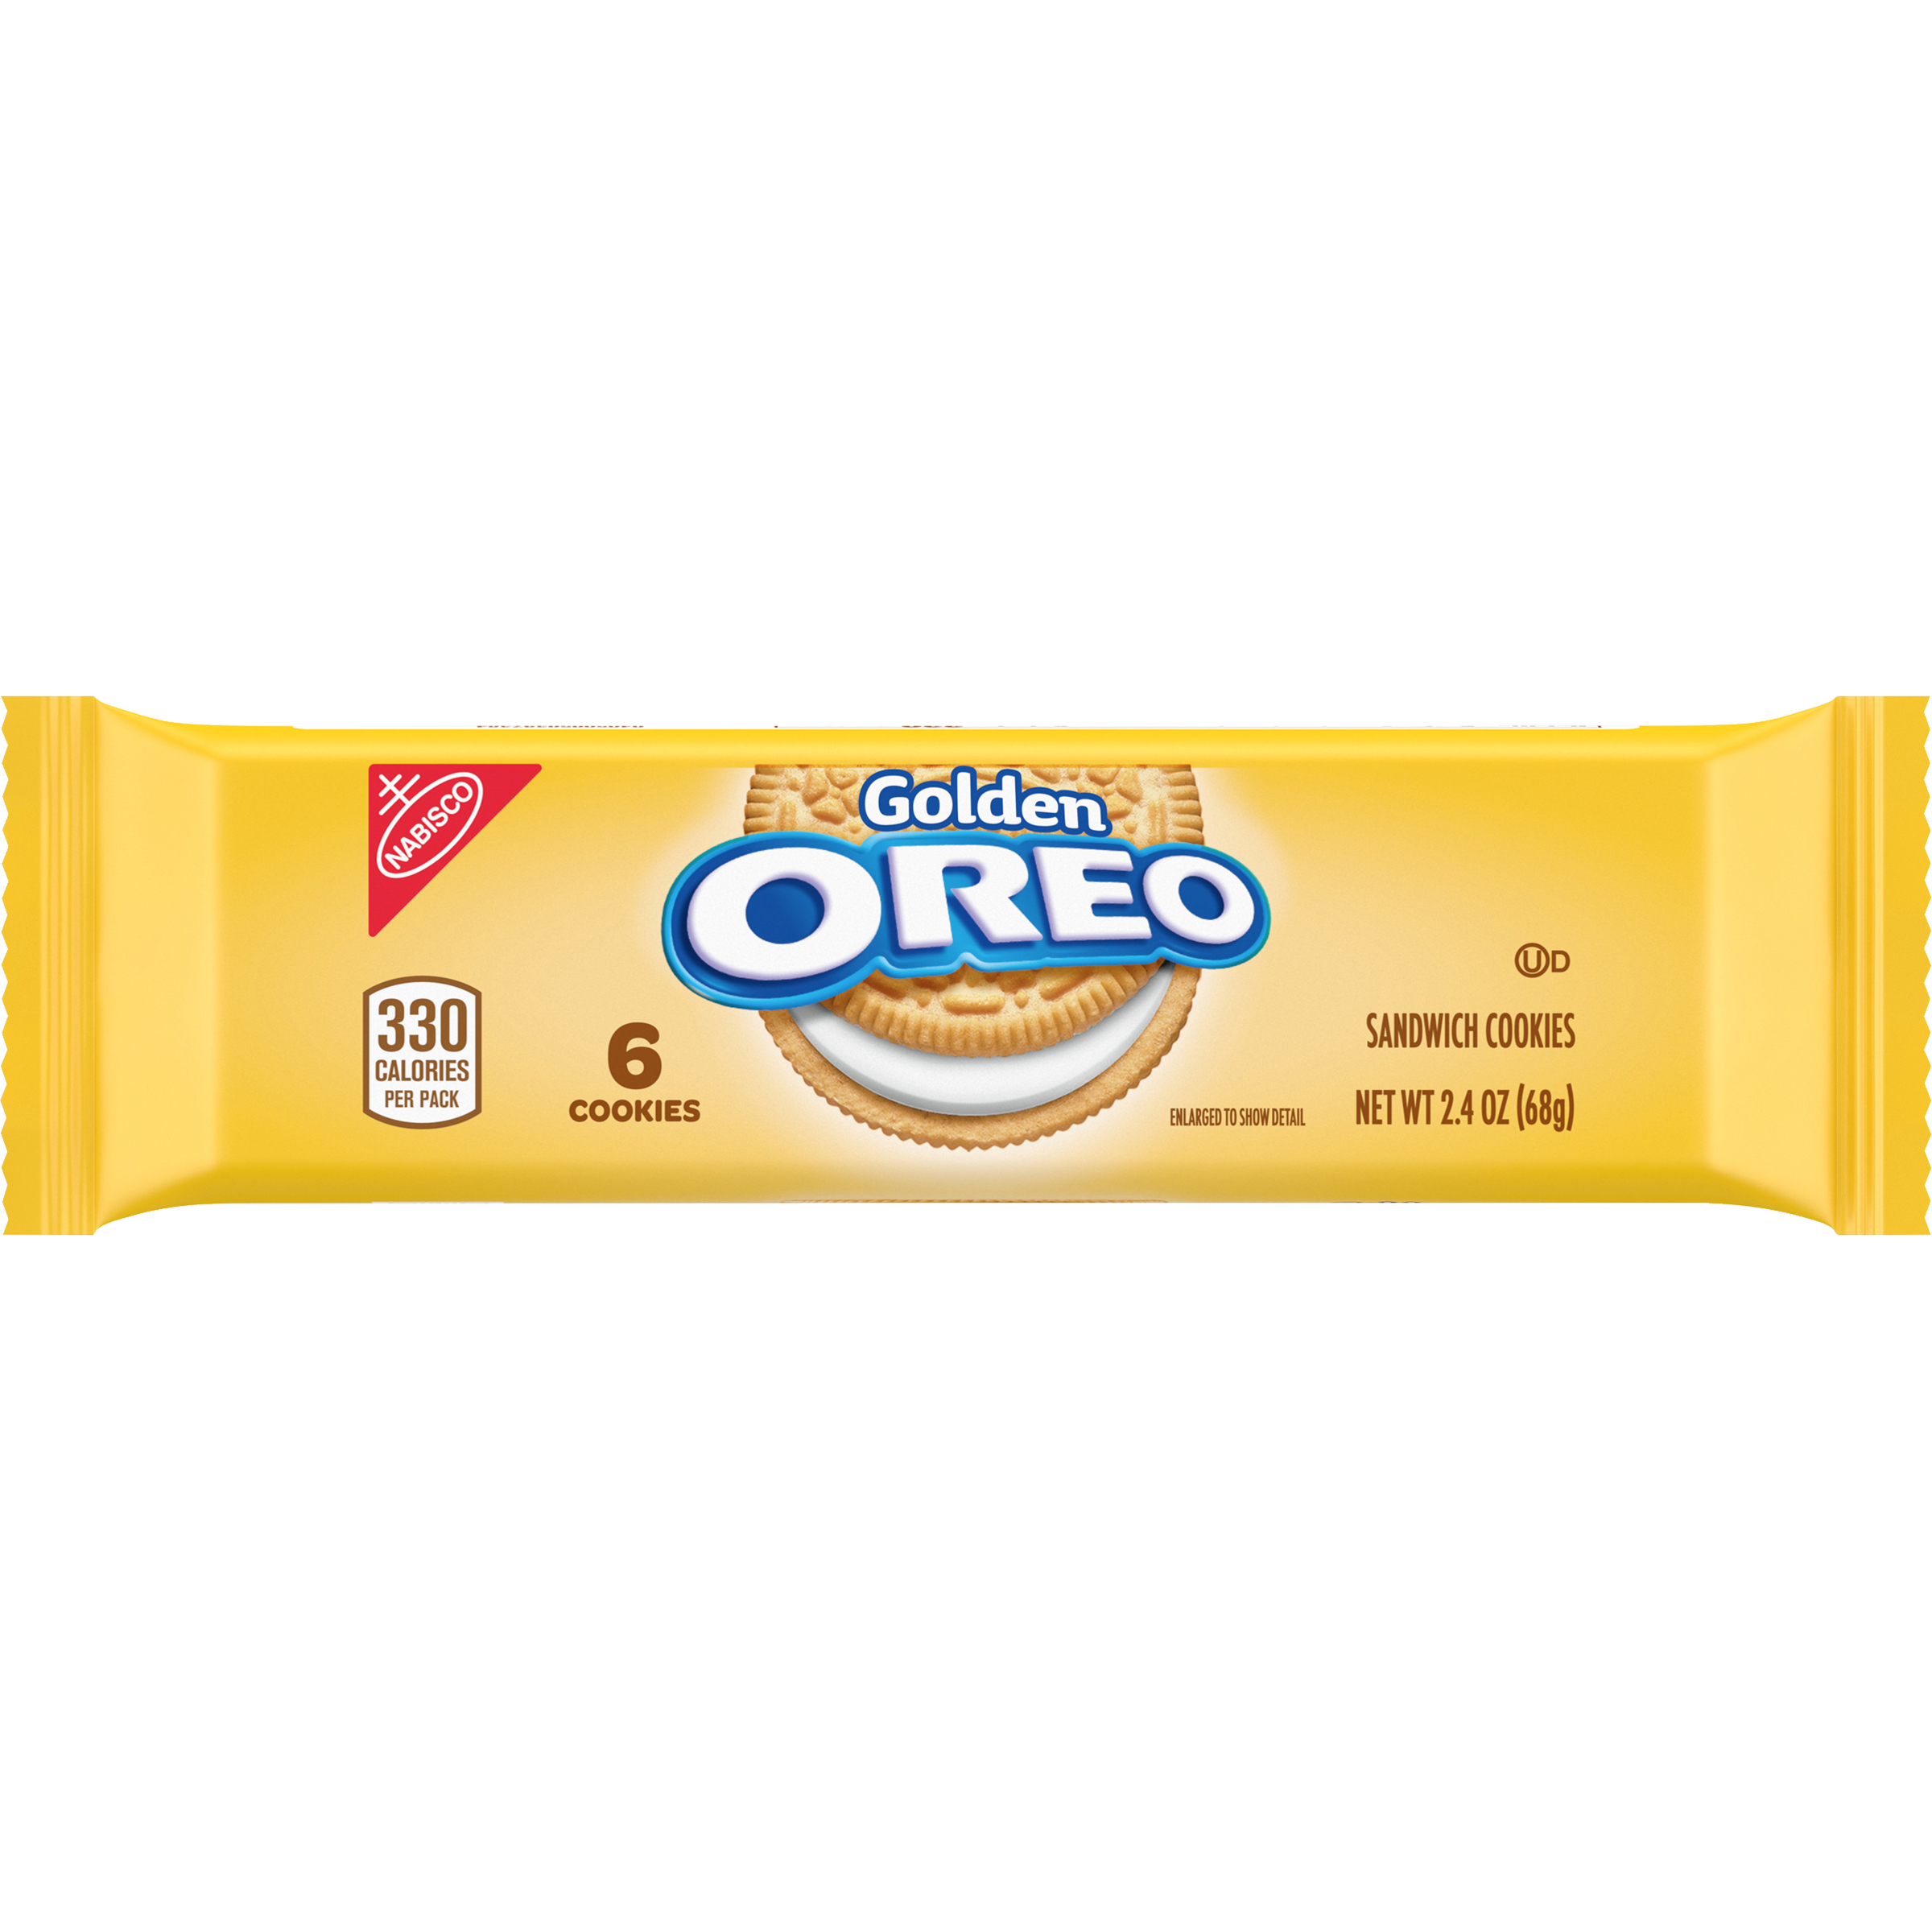 OREO Golden Oreo Cookies-Convenience Pack 28.8 oz-3